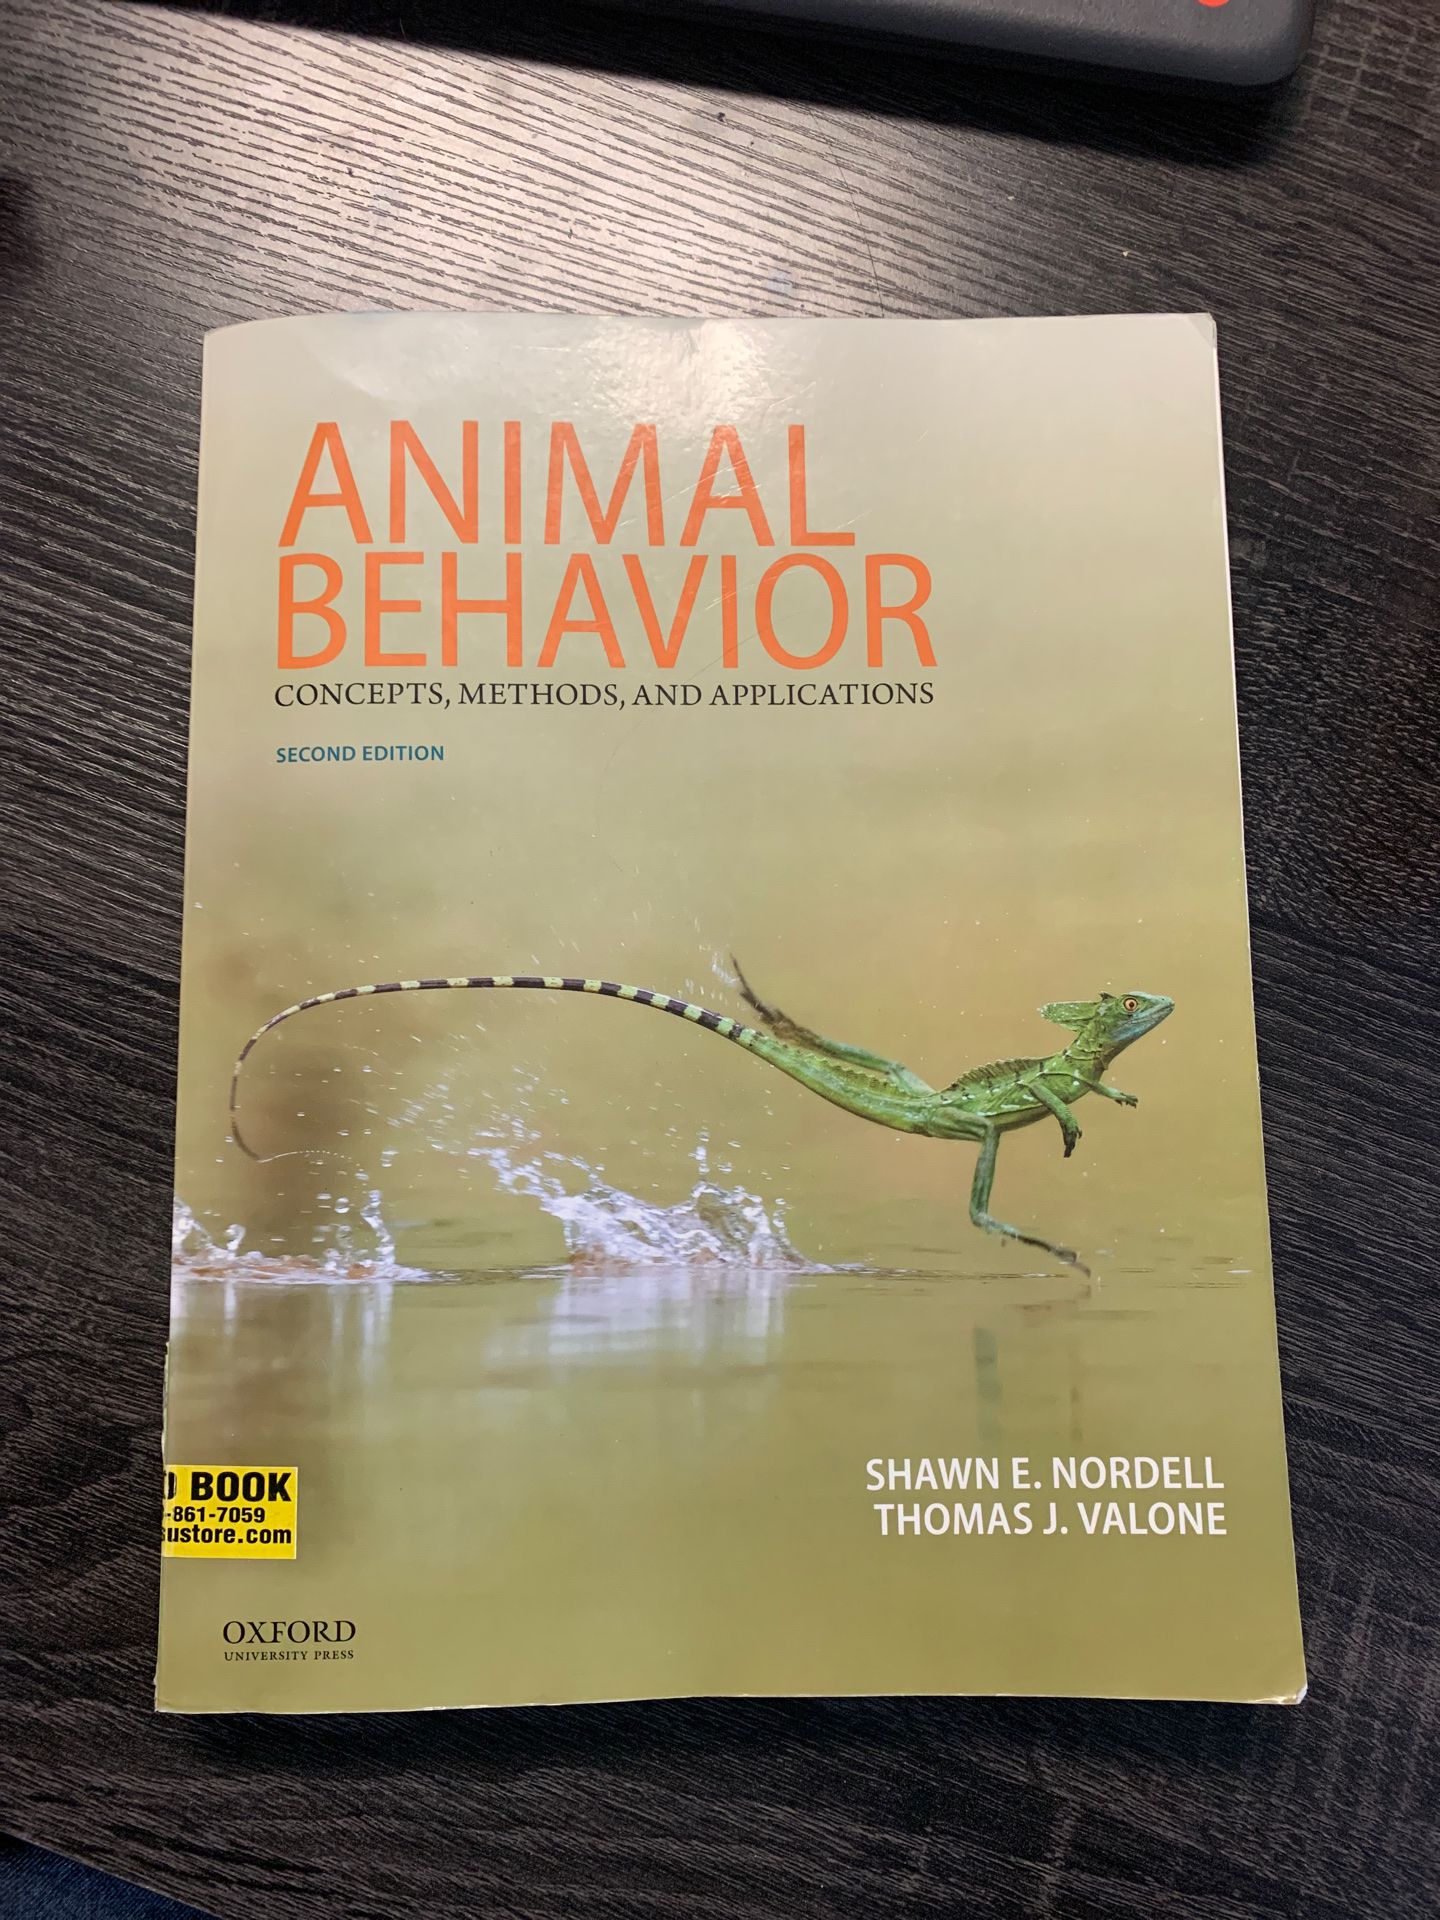 Animal behavior second edition college book used